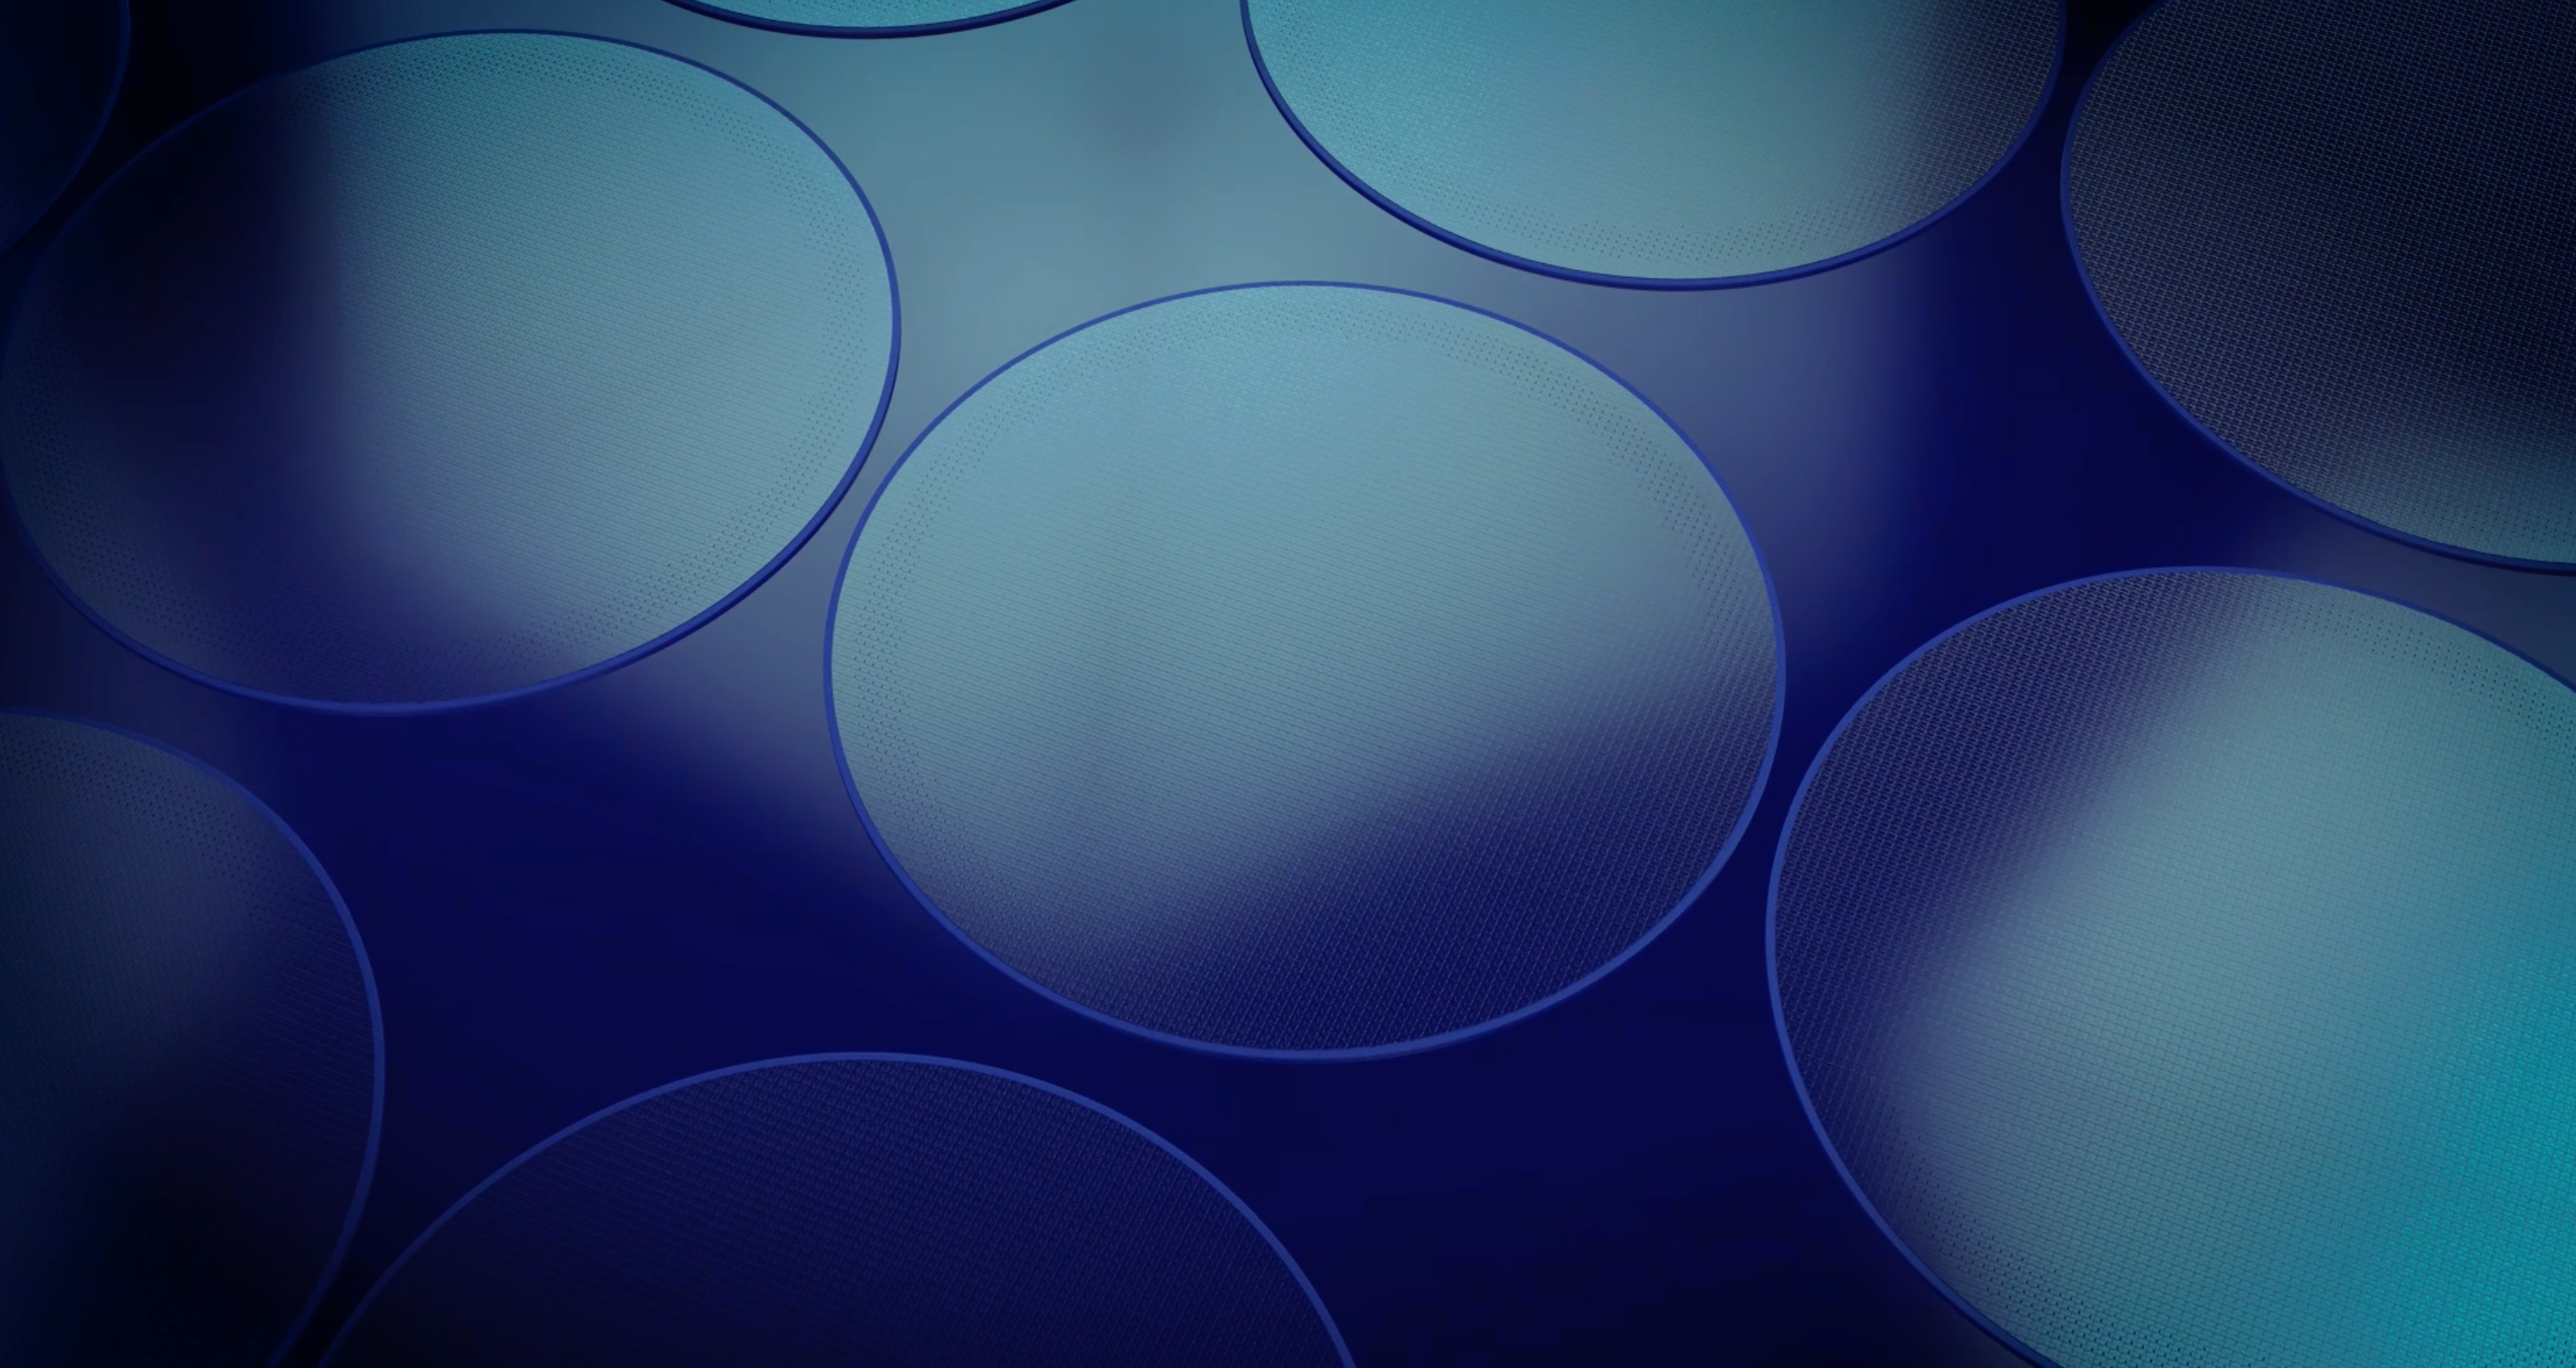 Detalhe abstrato de círculos iluminados em azul claro sobre fundo azul escuro